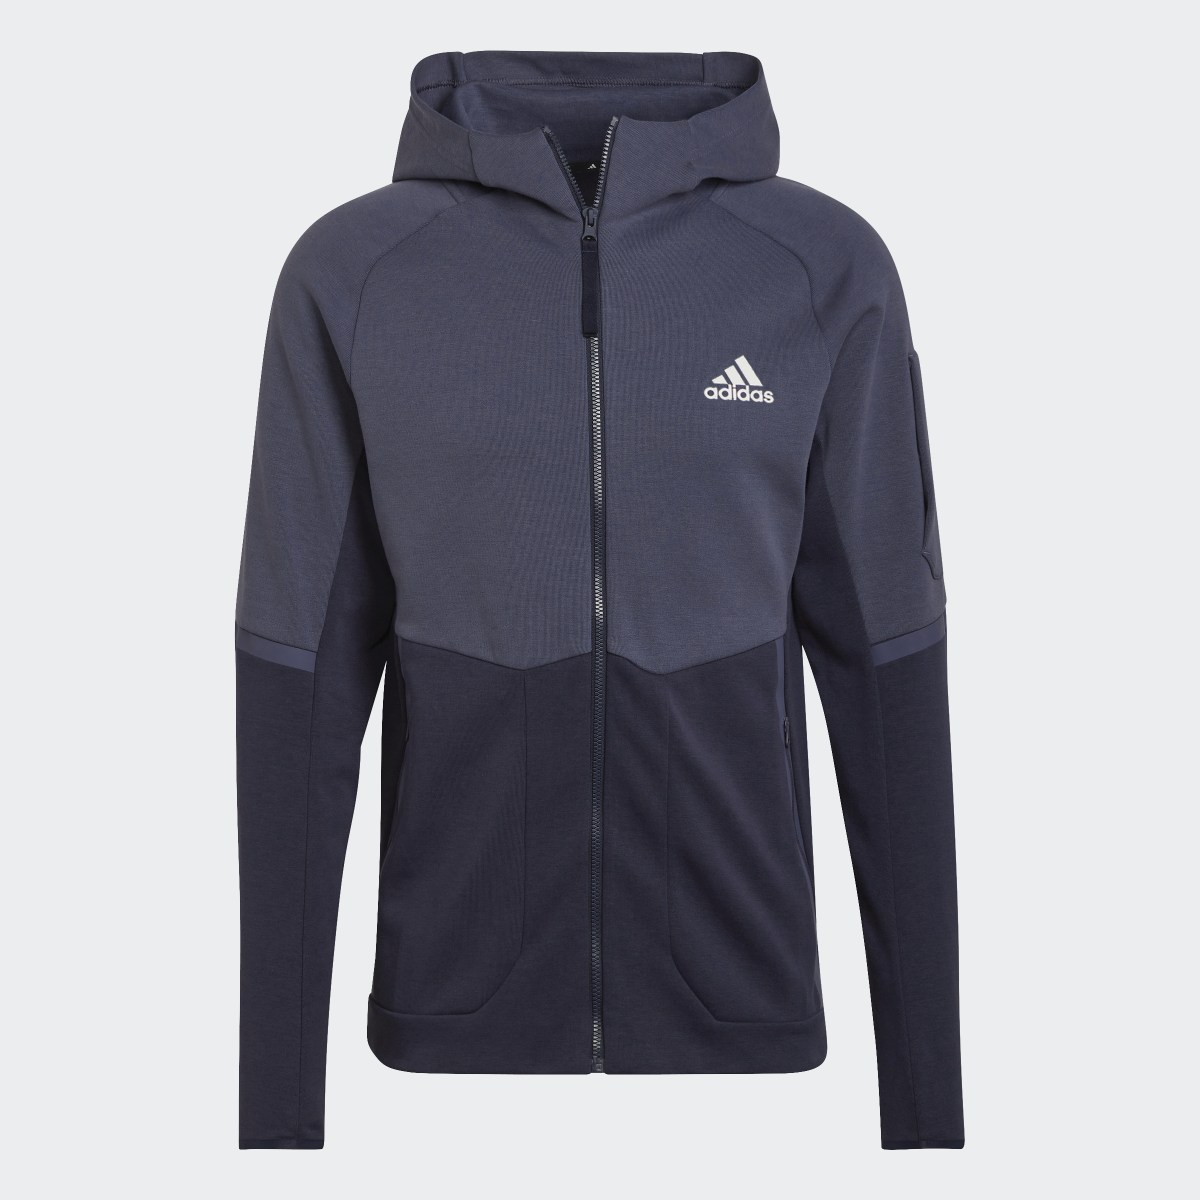 Adidas Designed for Gameday Full-Zip Jacket. 5